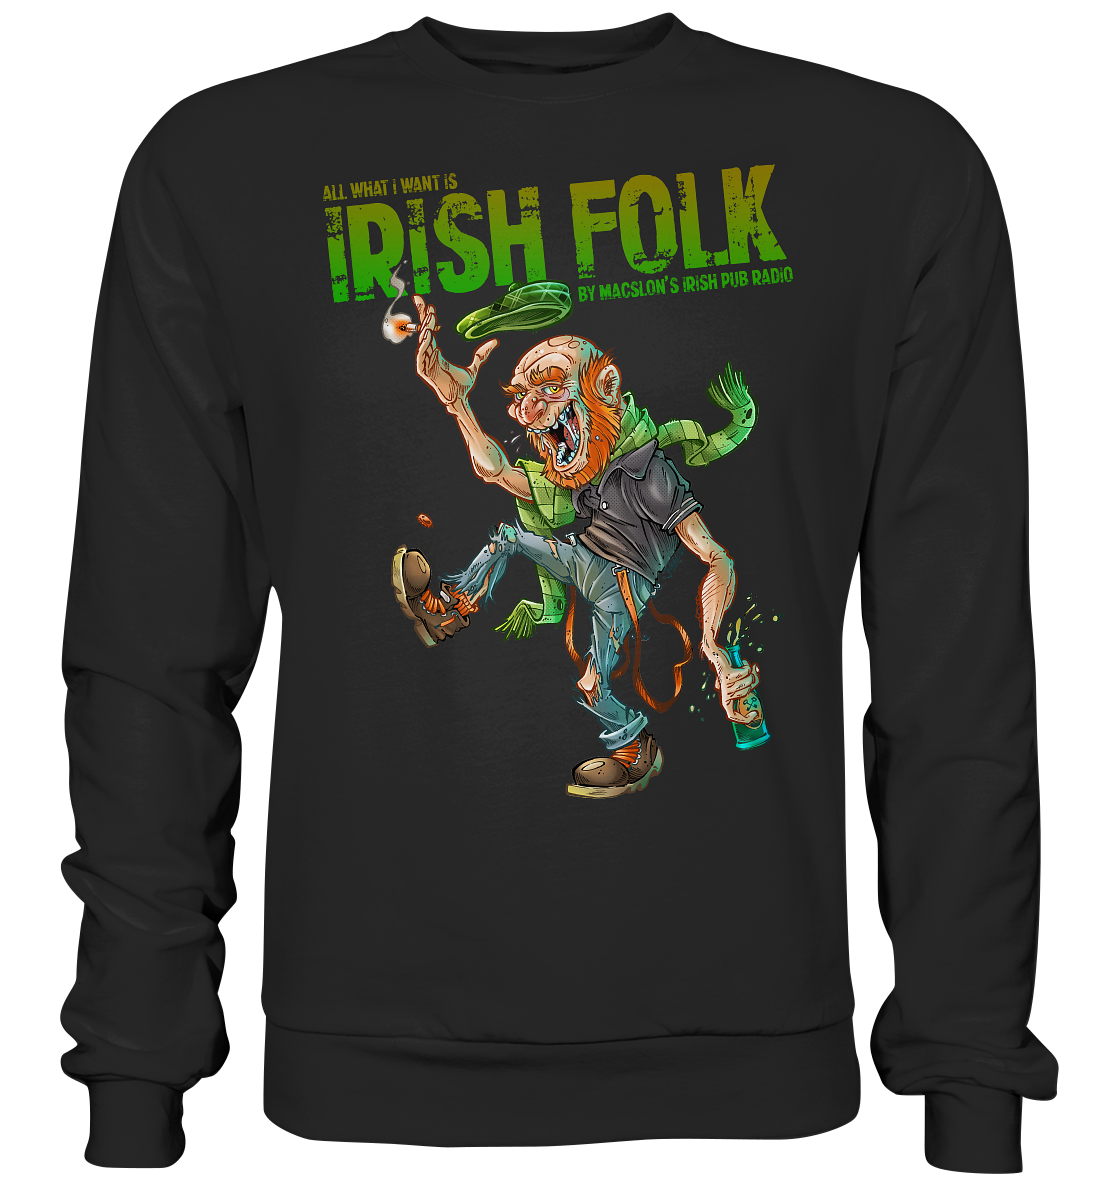 All What I Want Is "Irish Folk"  - Premium Sweatshirt